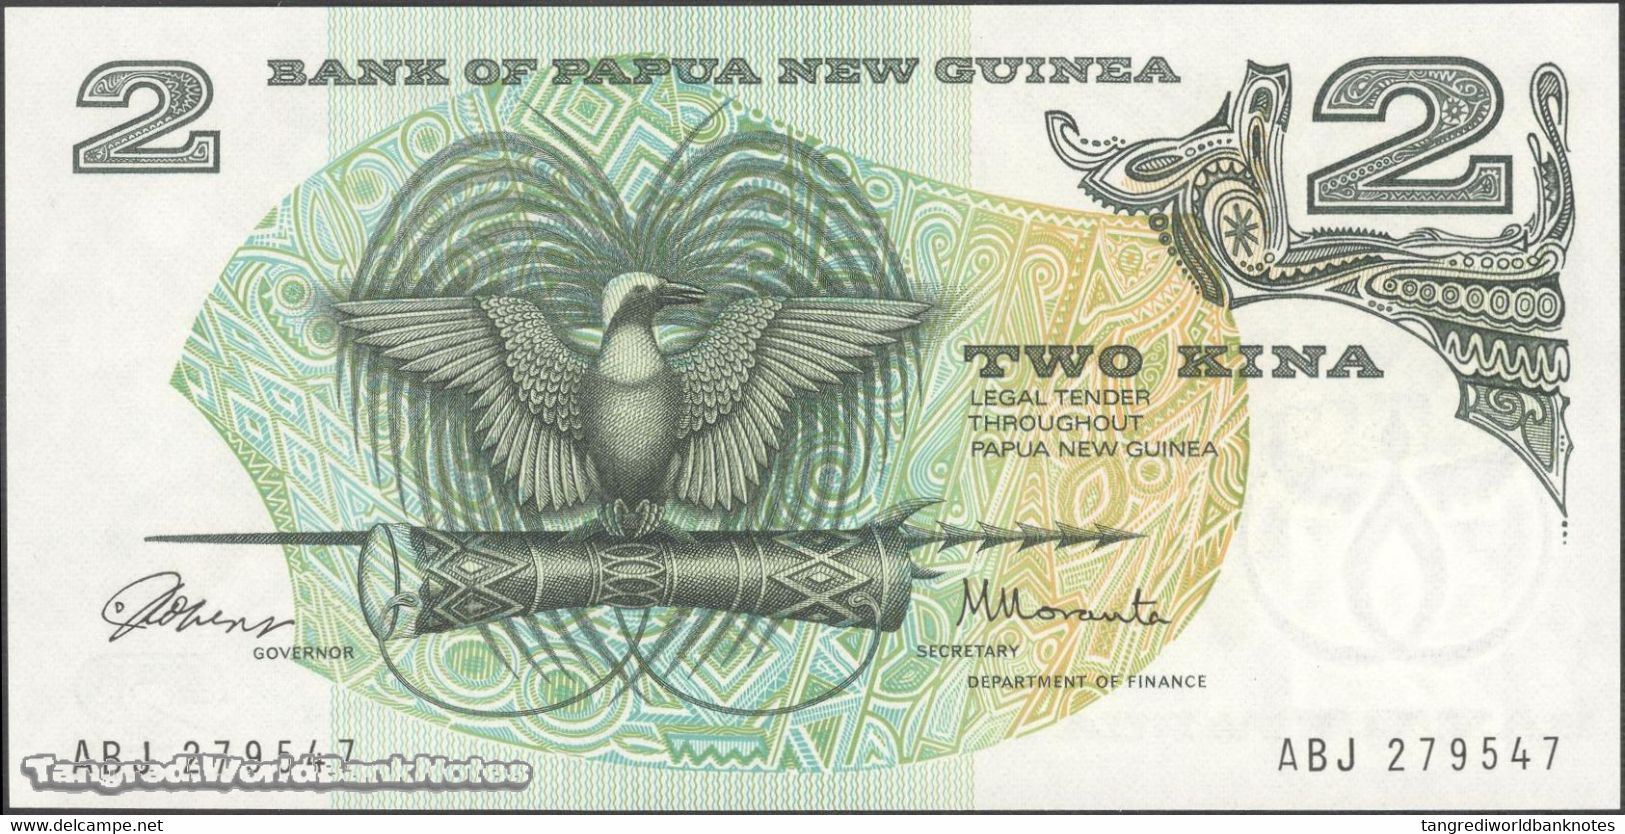 TWN - PAPUA NEW GUINEA 1a - 2 Kina 1975 Prefix ABJ - Signatures: ToRobert & Morauta UNC - Papua New Guinea